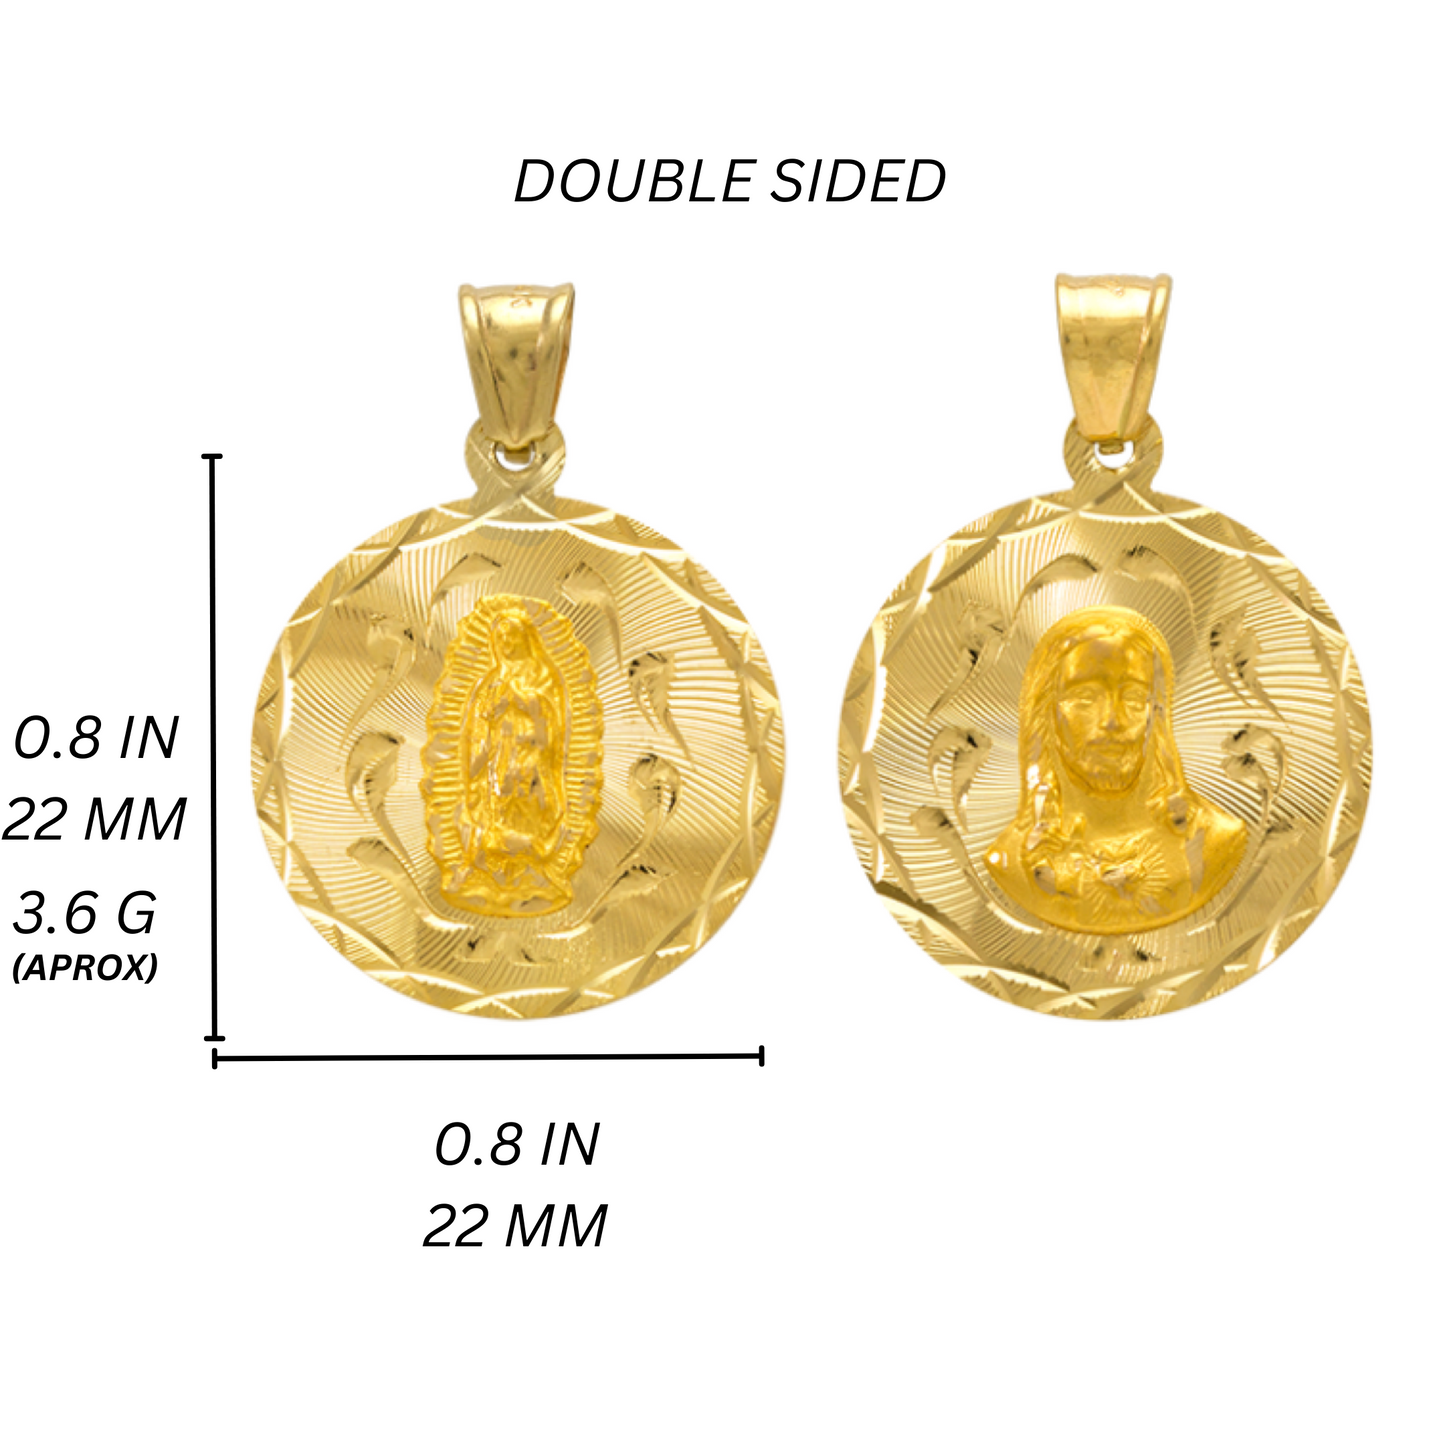 14K Gold Double Sided Jesus & Virgencita Round Pendant